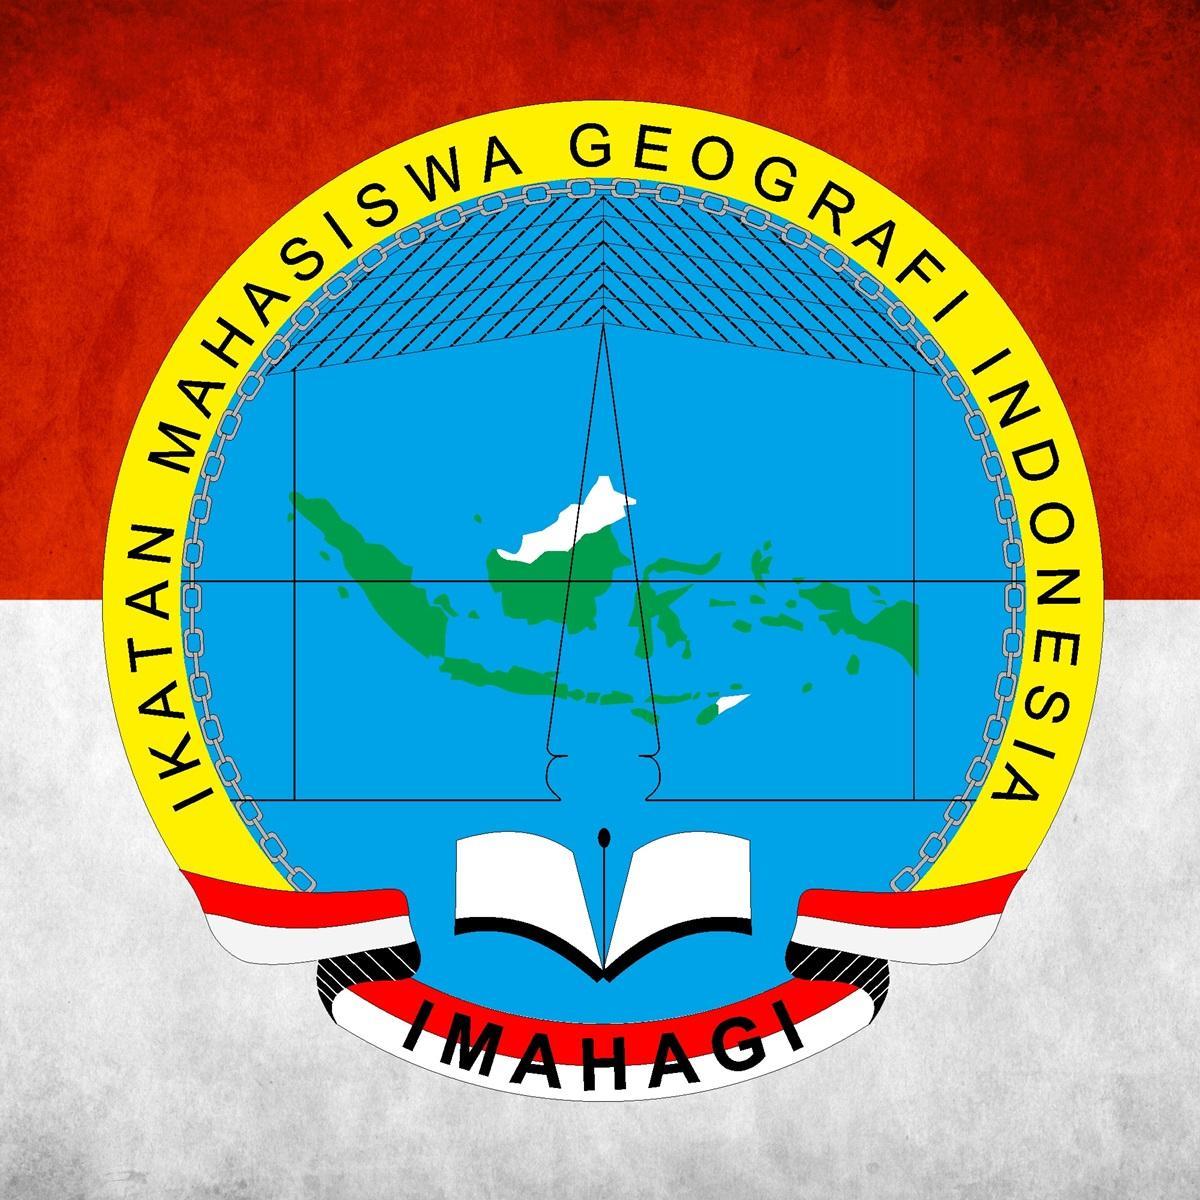 Akun Twitter Resmi IMAHAGI - Ikatan Mahasiswa Geografi Indonesia
ikuti kami di https://t.co/UFYNpvZXfq ||
https://t.co/v7Vewsfq58